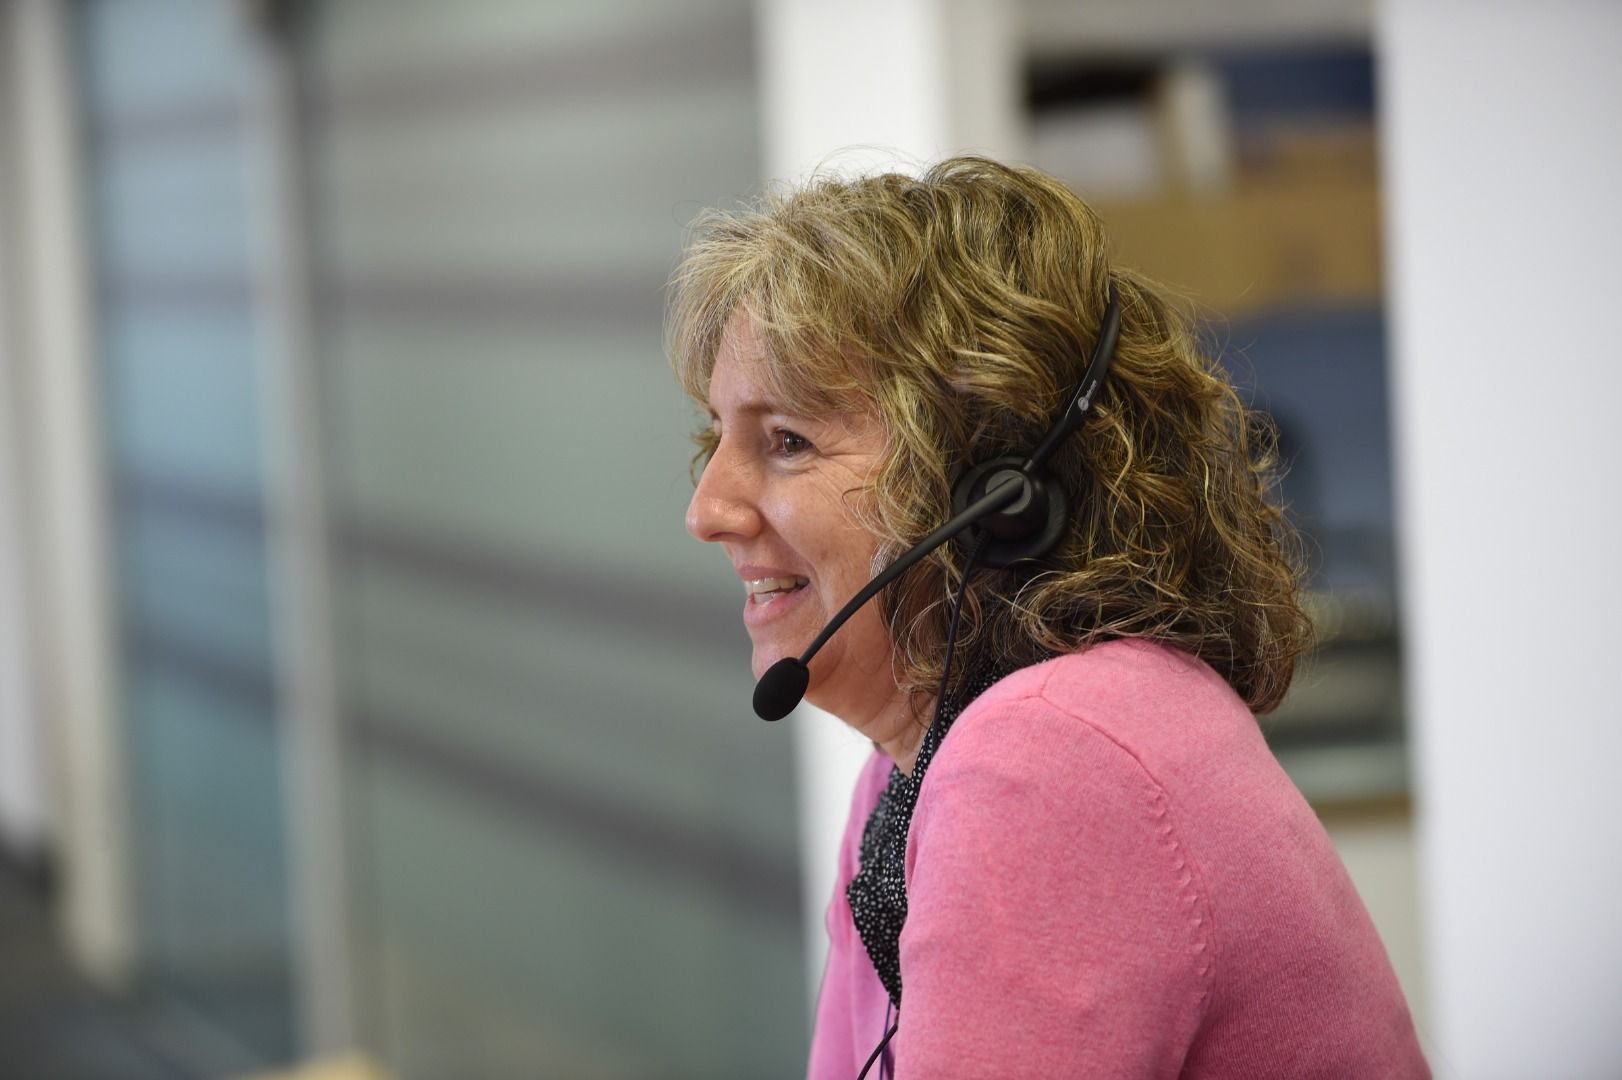 An employee wearing a headset